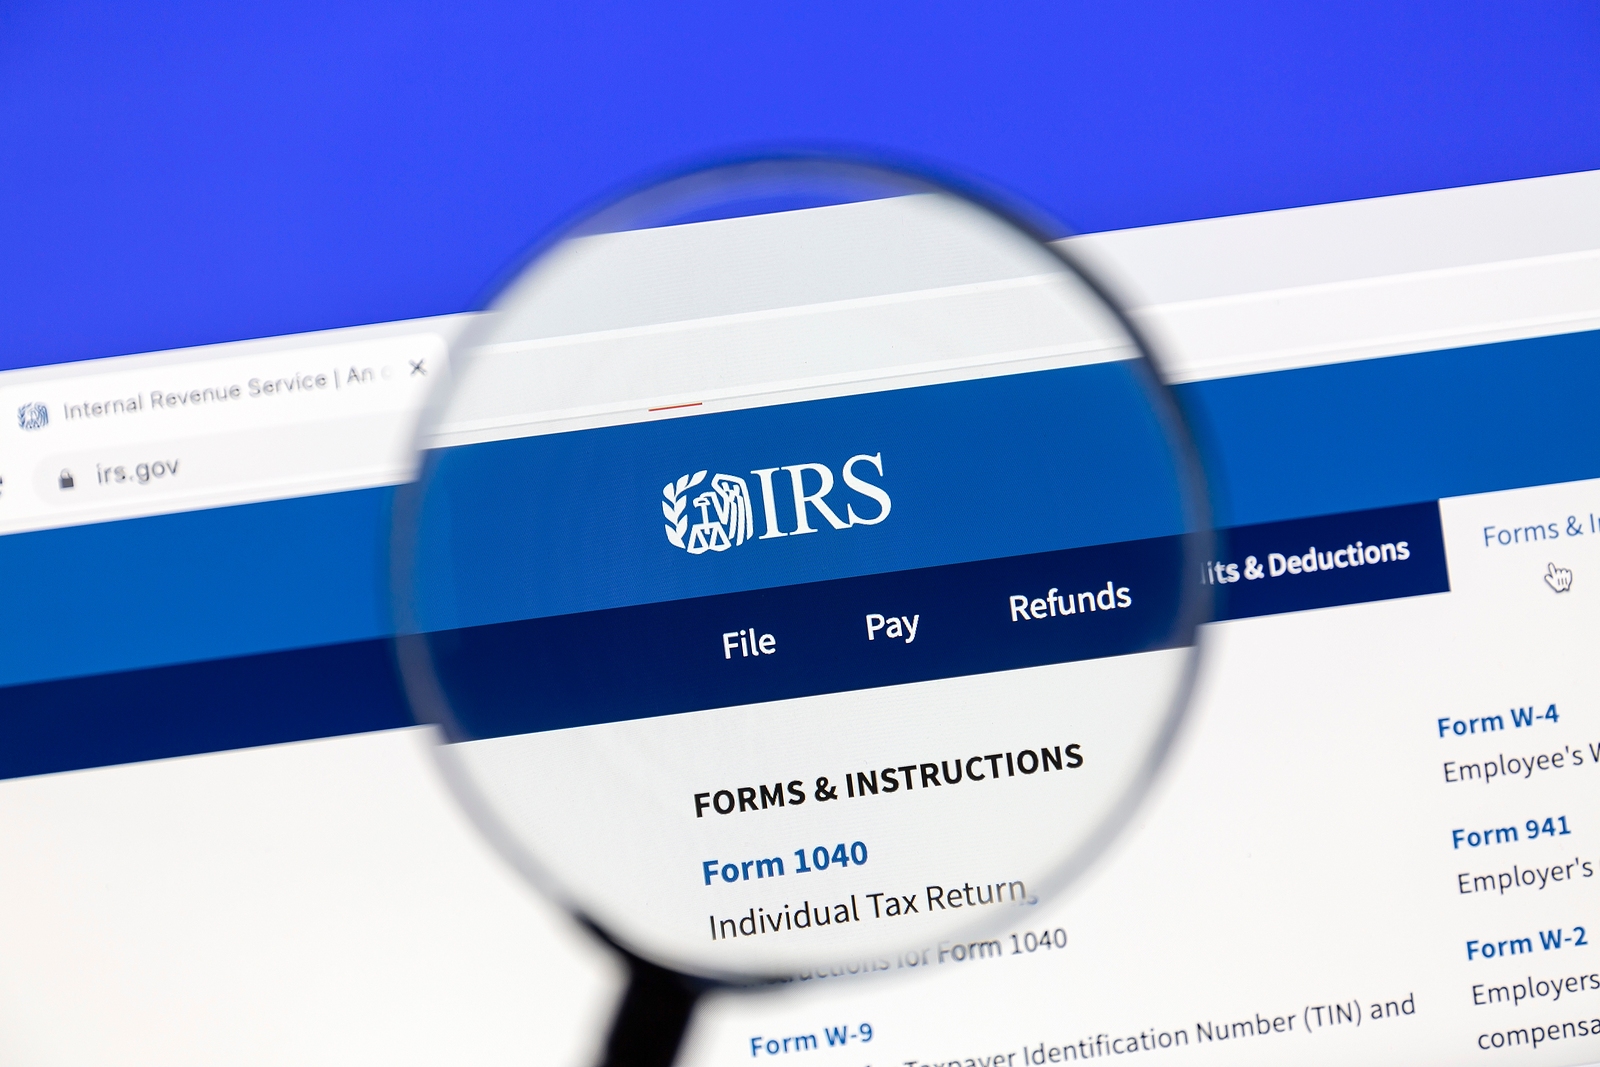 Image of Internal Revenue Service website